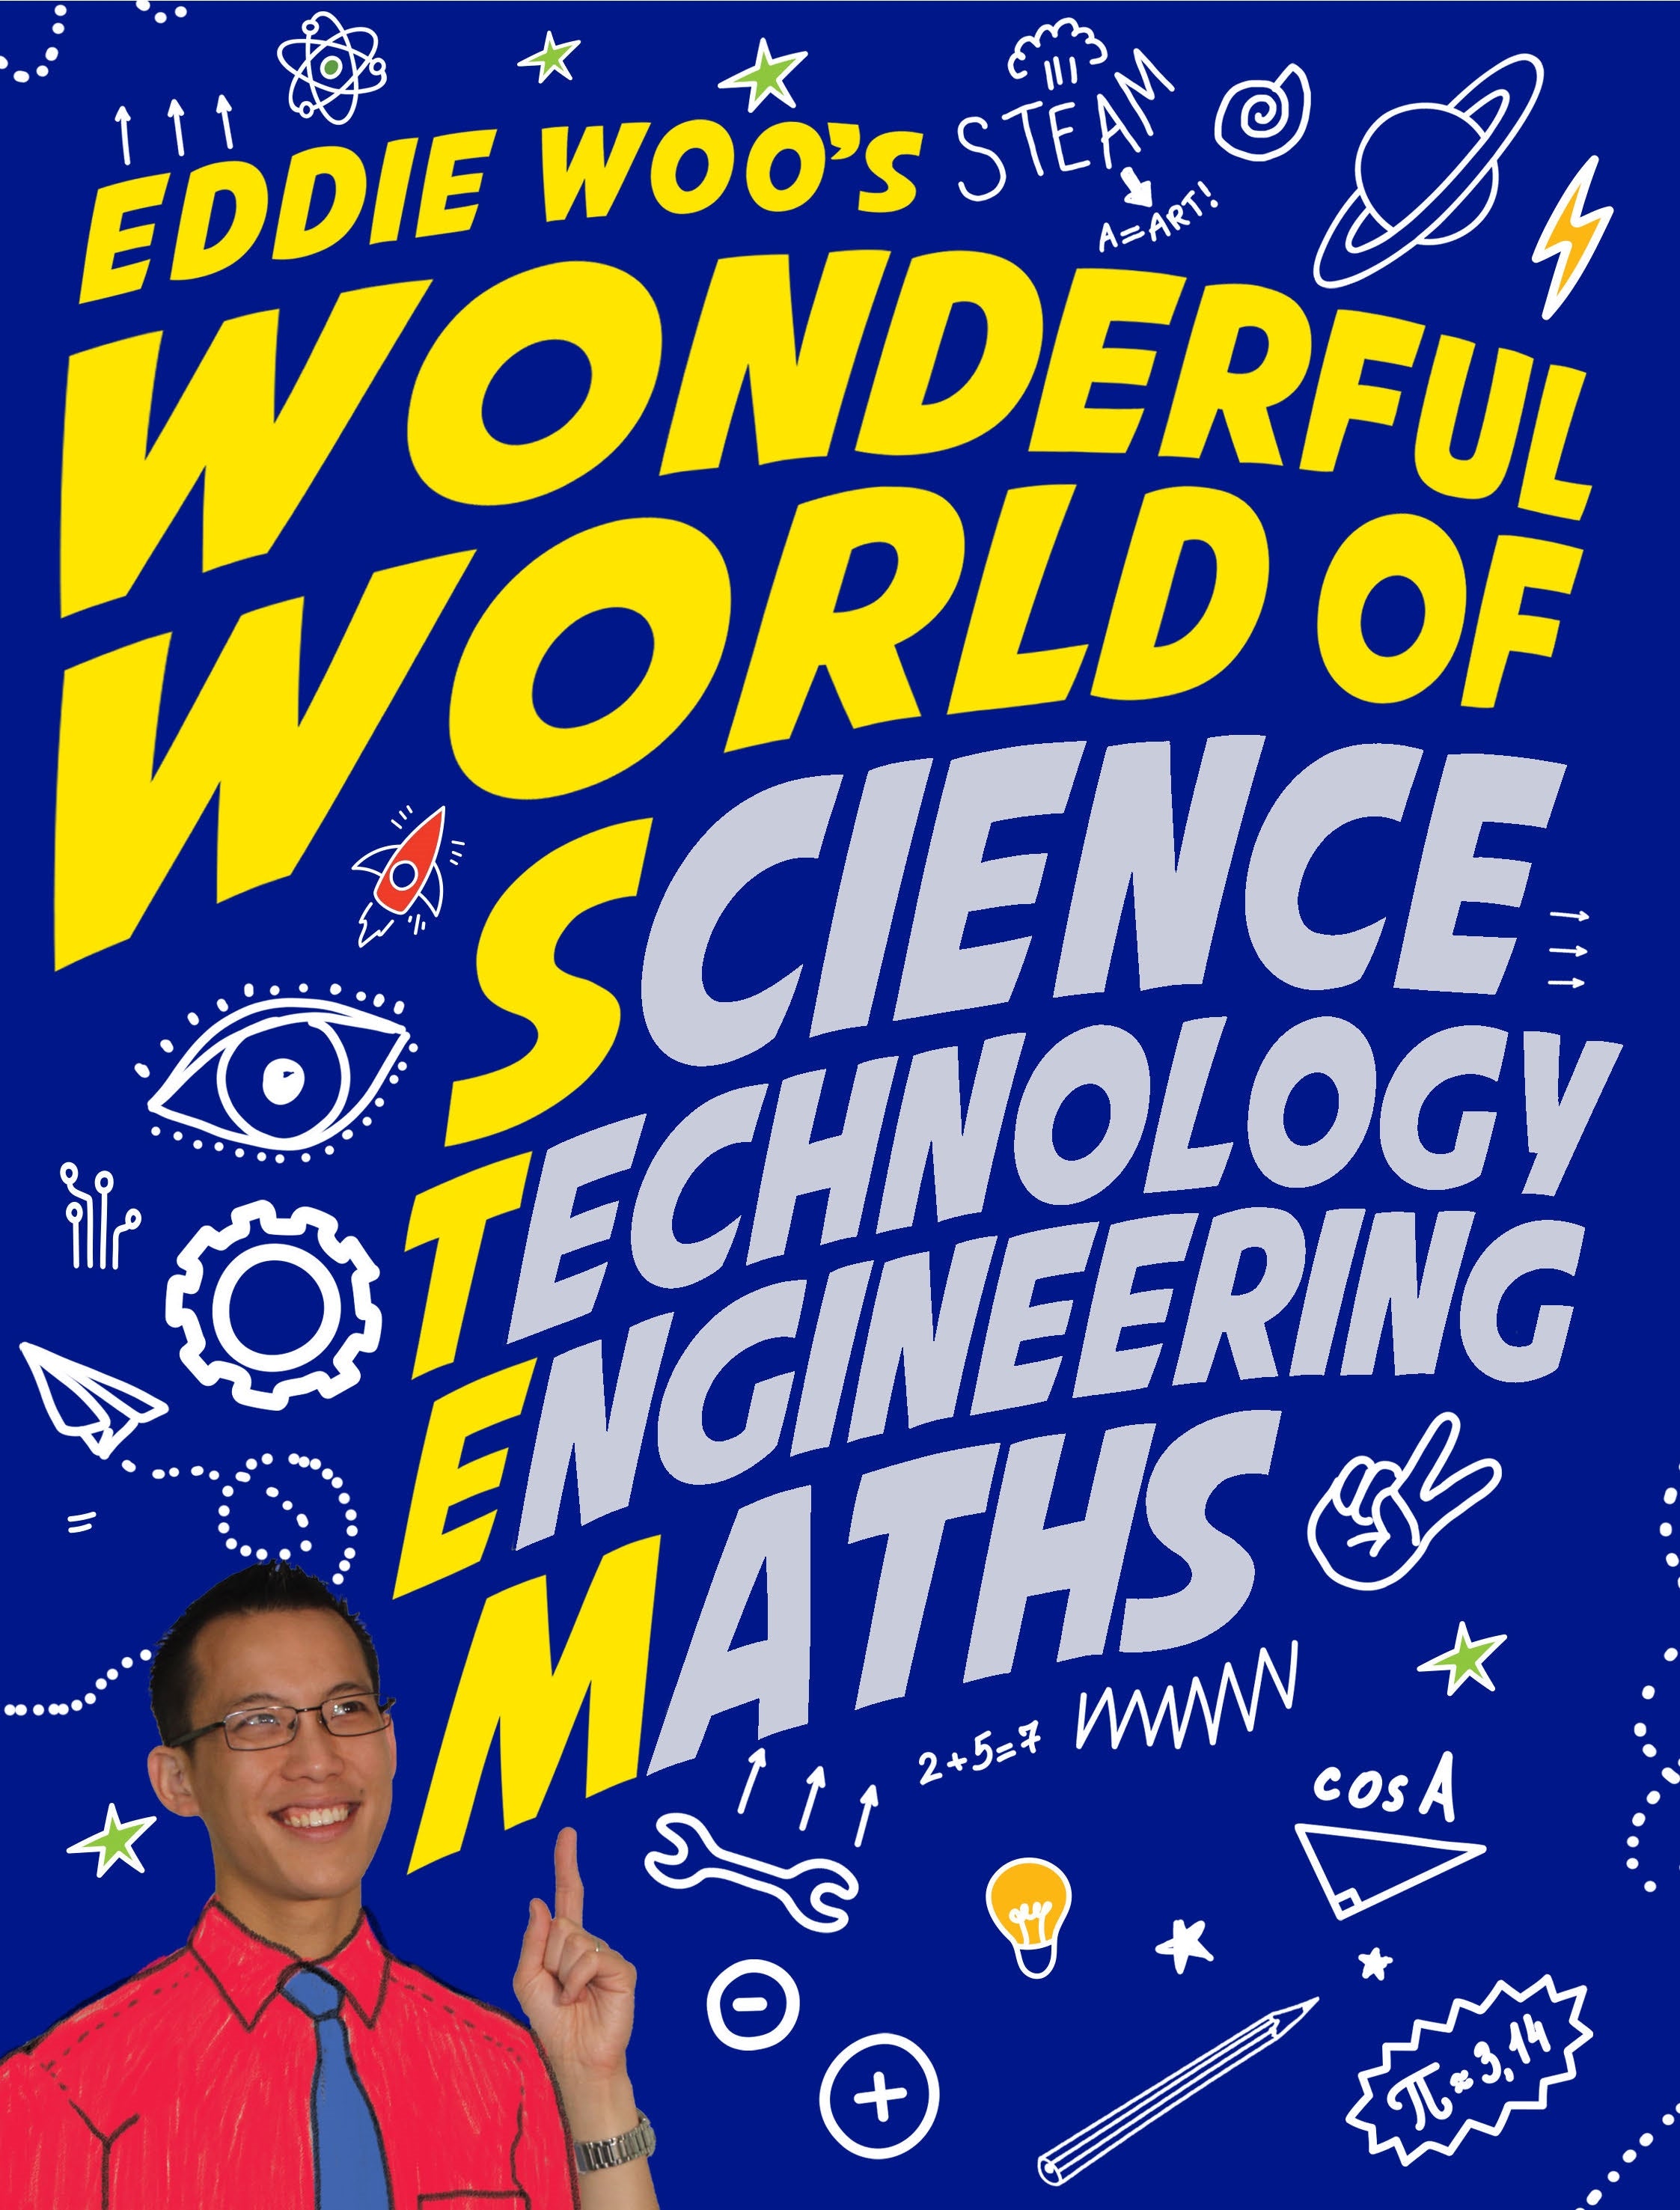 EDDIE WOO'S WONDERFUL WORLD OF STEM